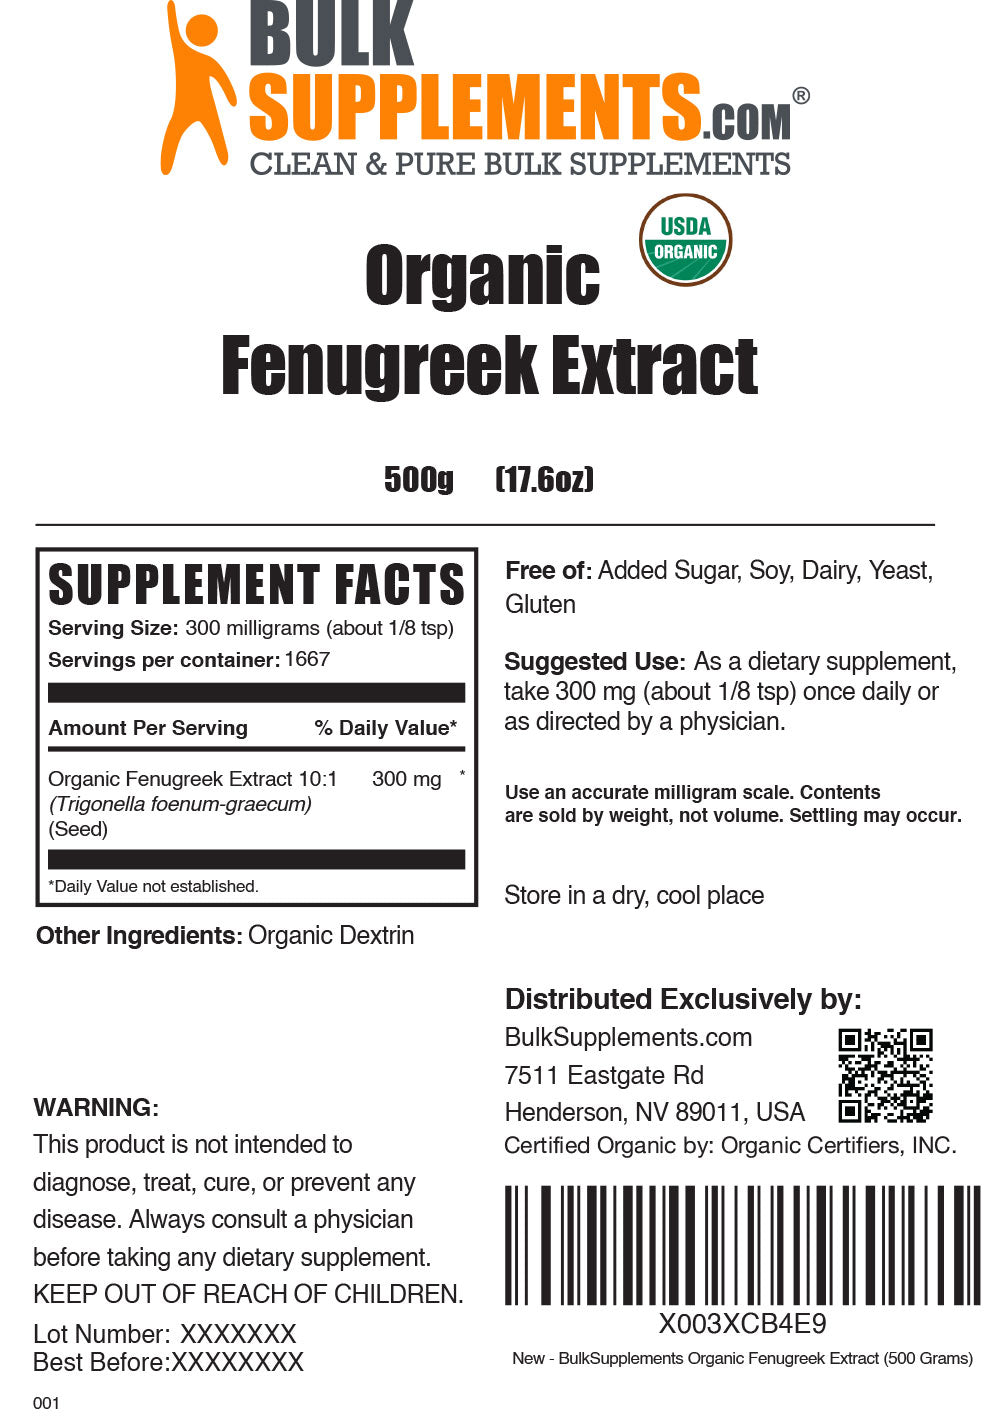 Organic Fenugreek Extract Powder